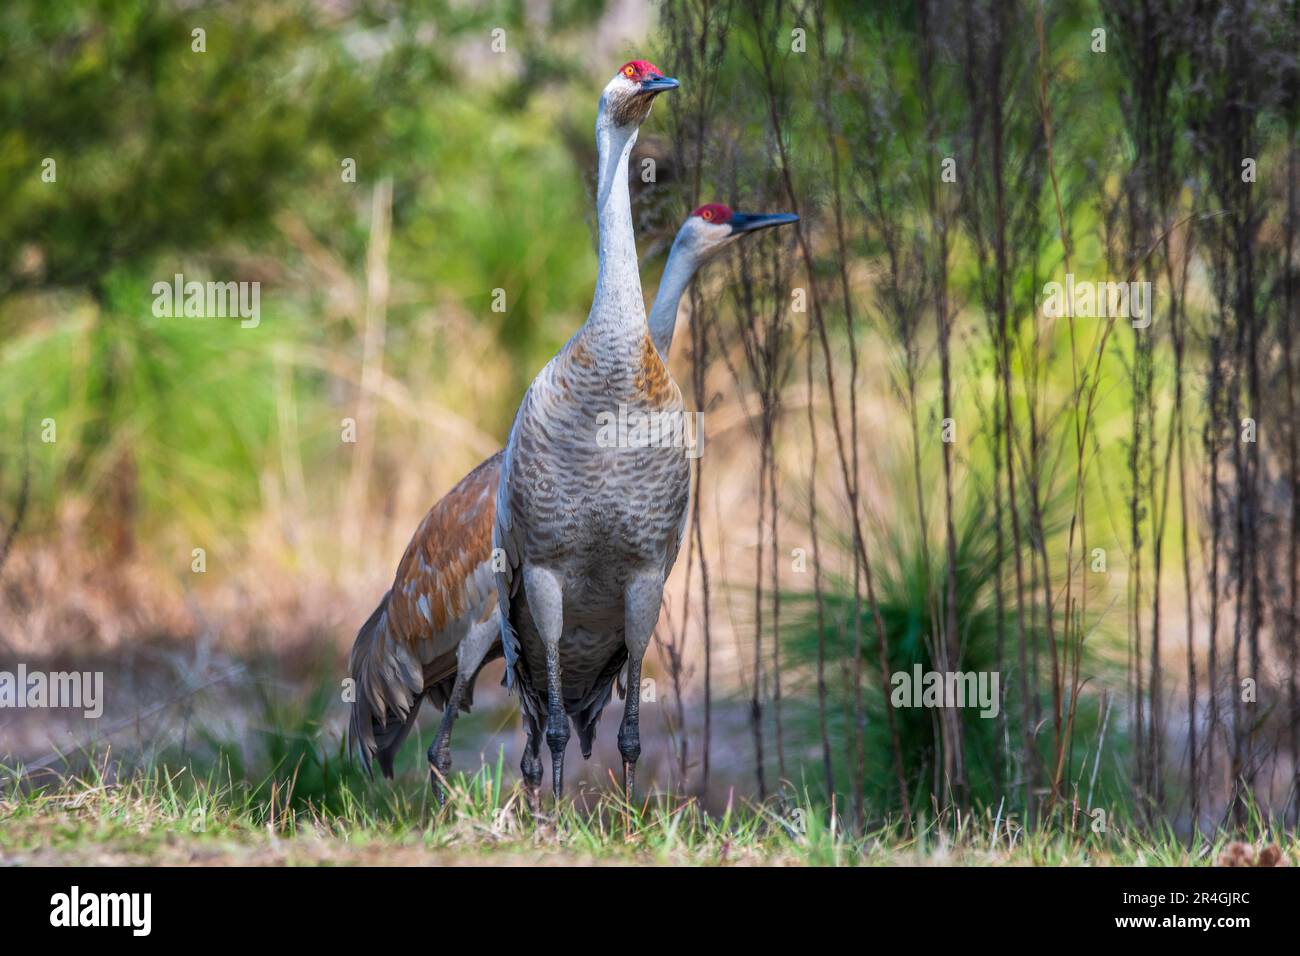 A wild sandhill crane in a Florida park. Stock Photo